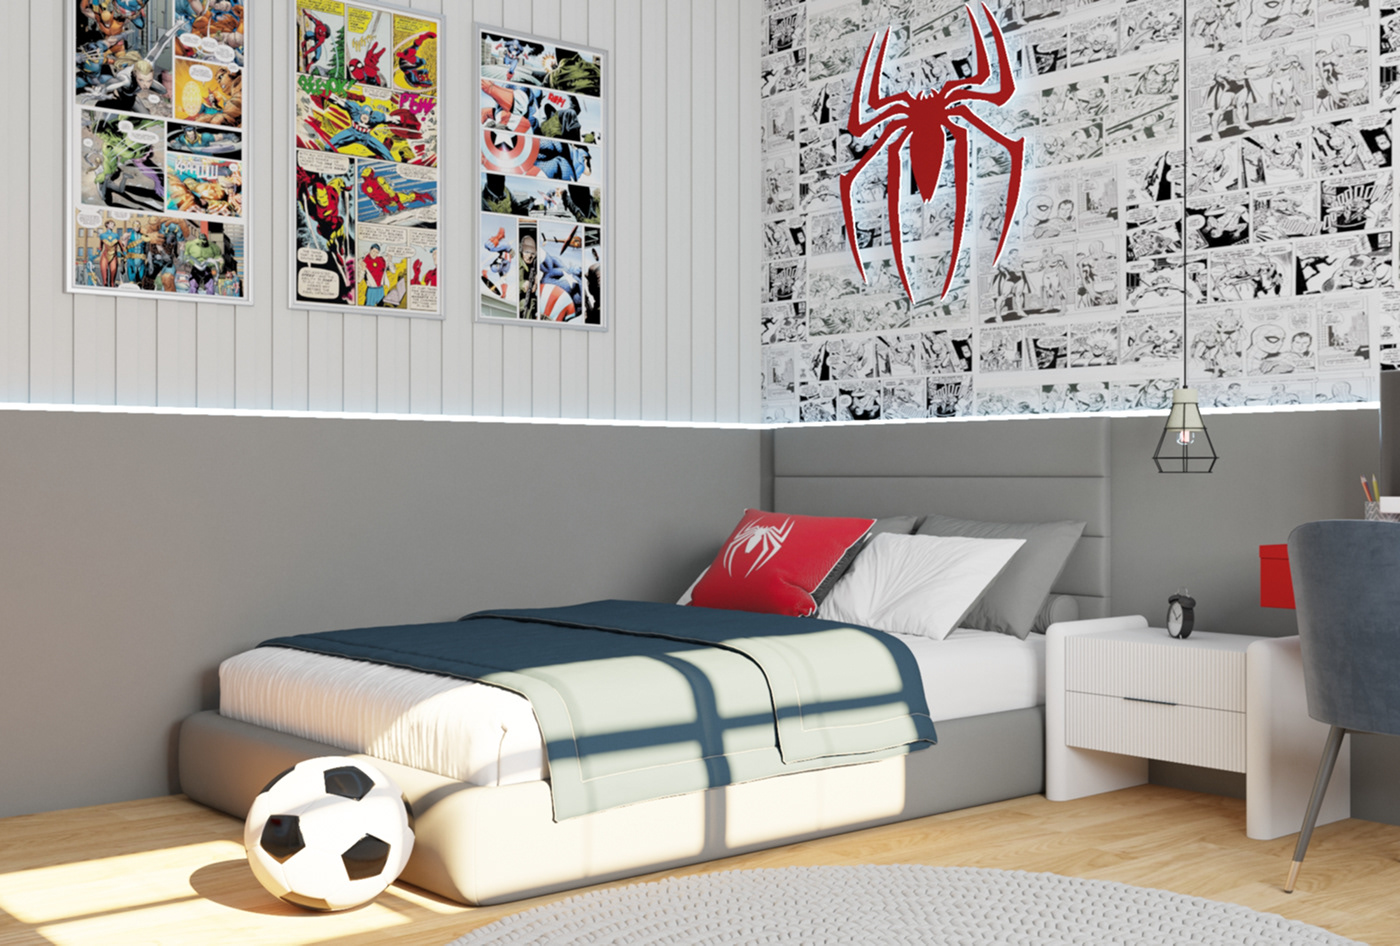 spiderman kidsroom bedroom Interior 3ds max vray